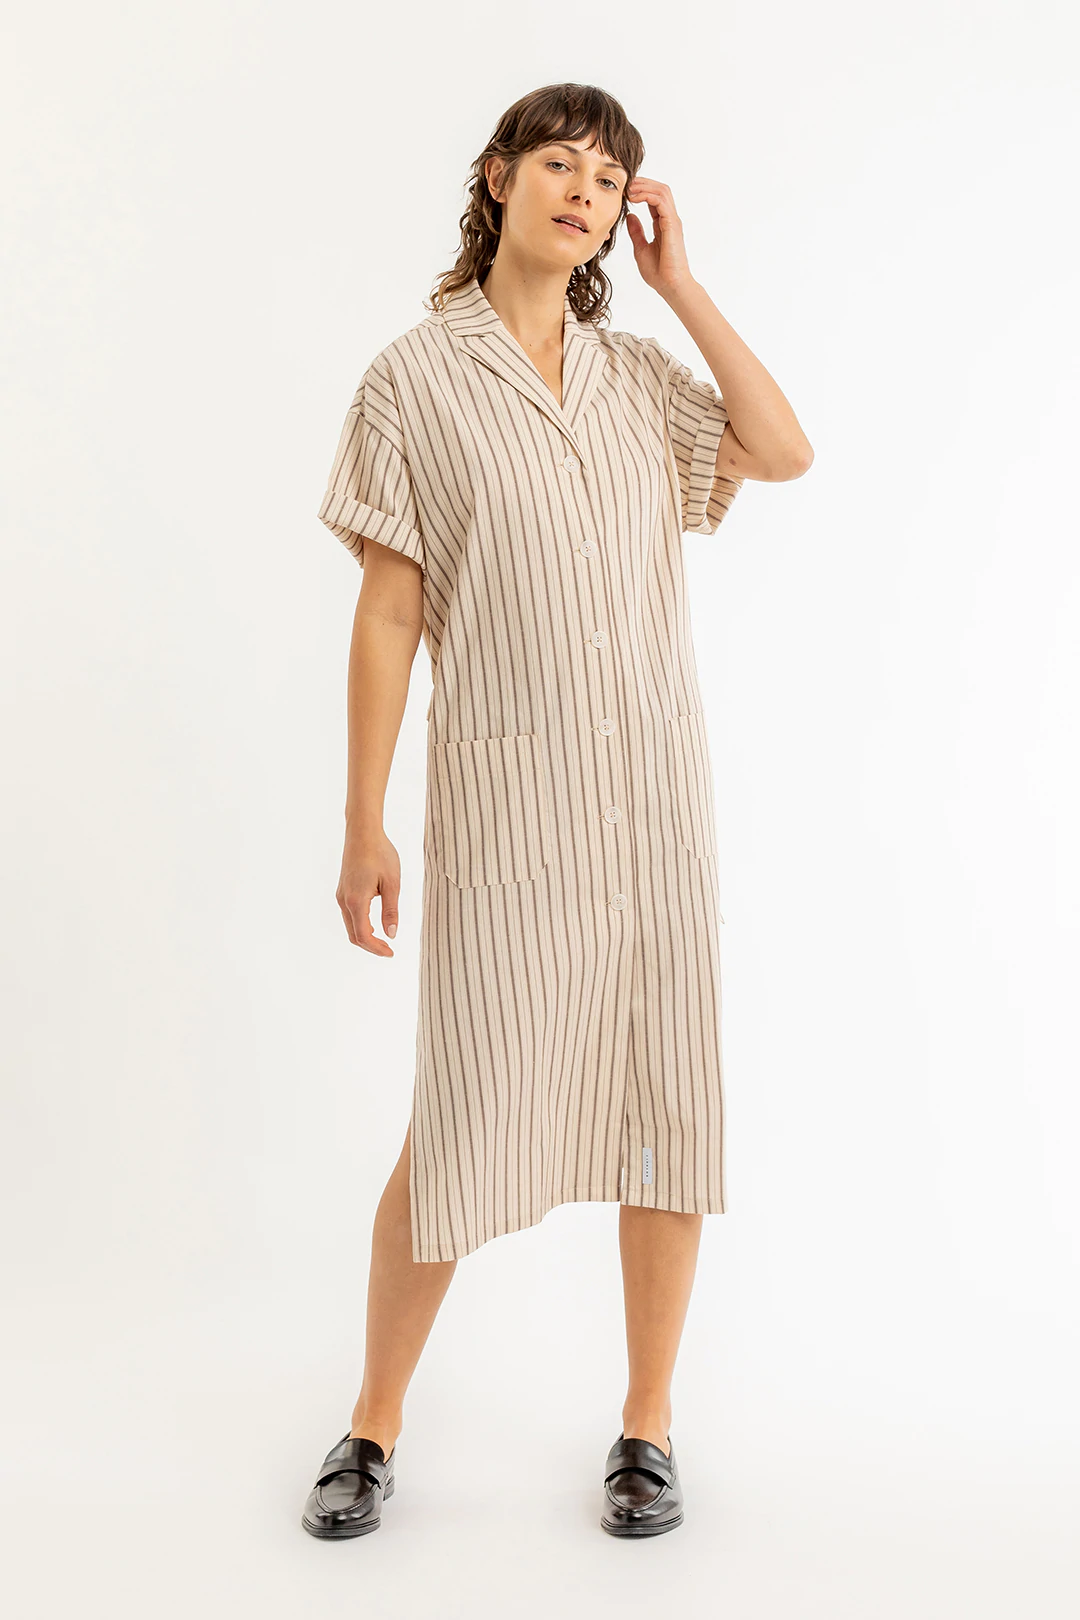 ROTHOLZ Bowling Shirt Dress oatmeal stripe M